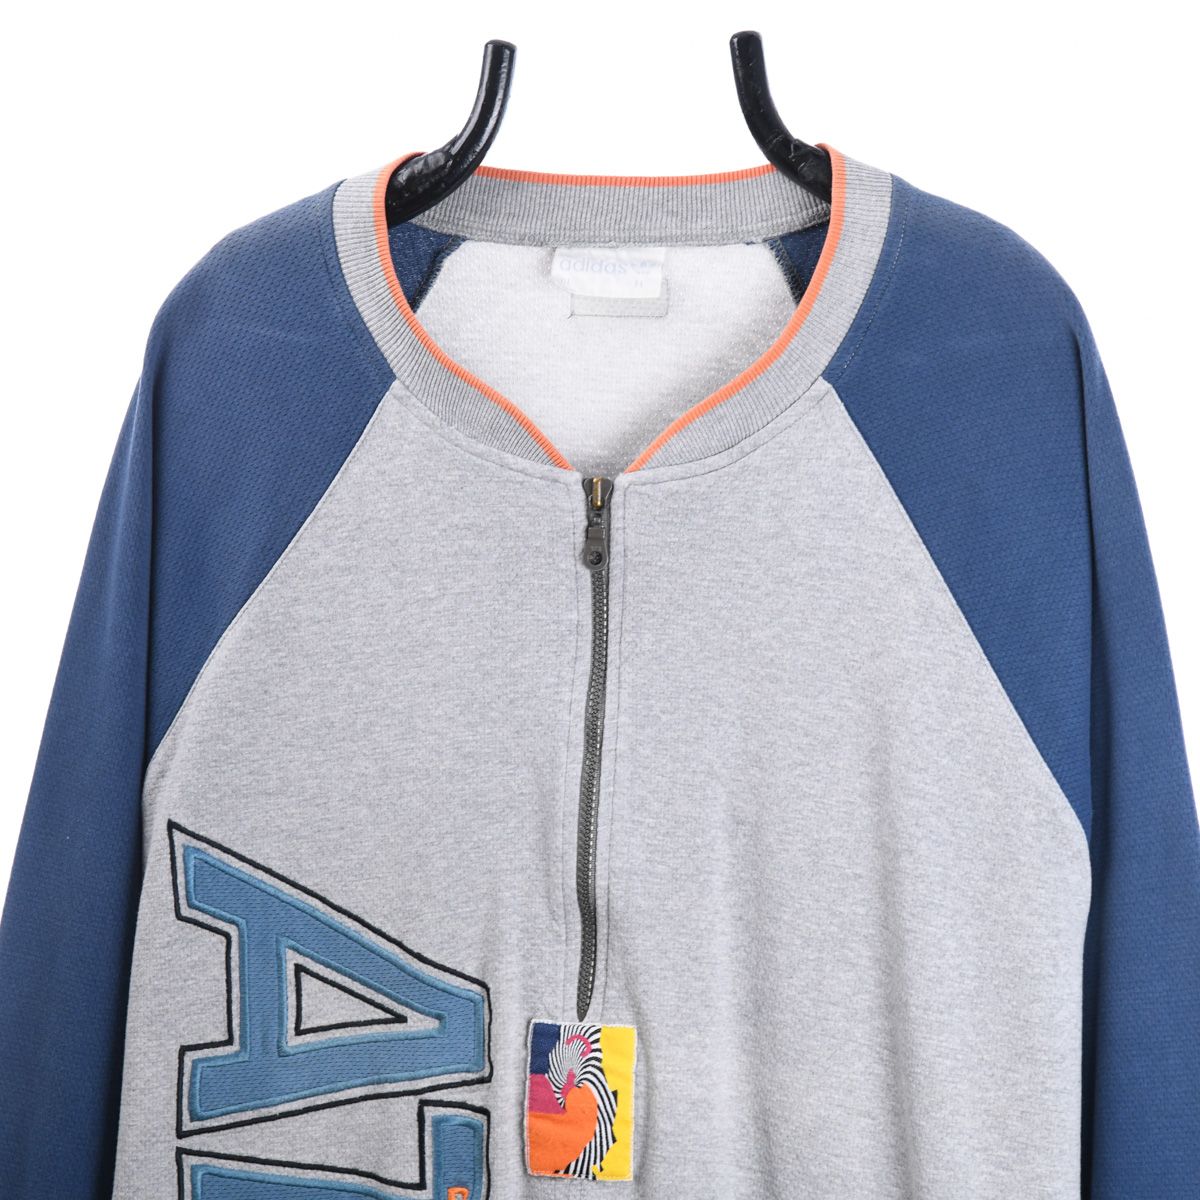 Adidas Late 1980s ATP Tour Half-Zip Sweatshirt